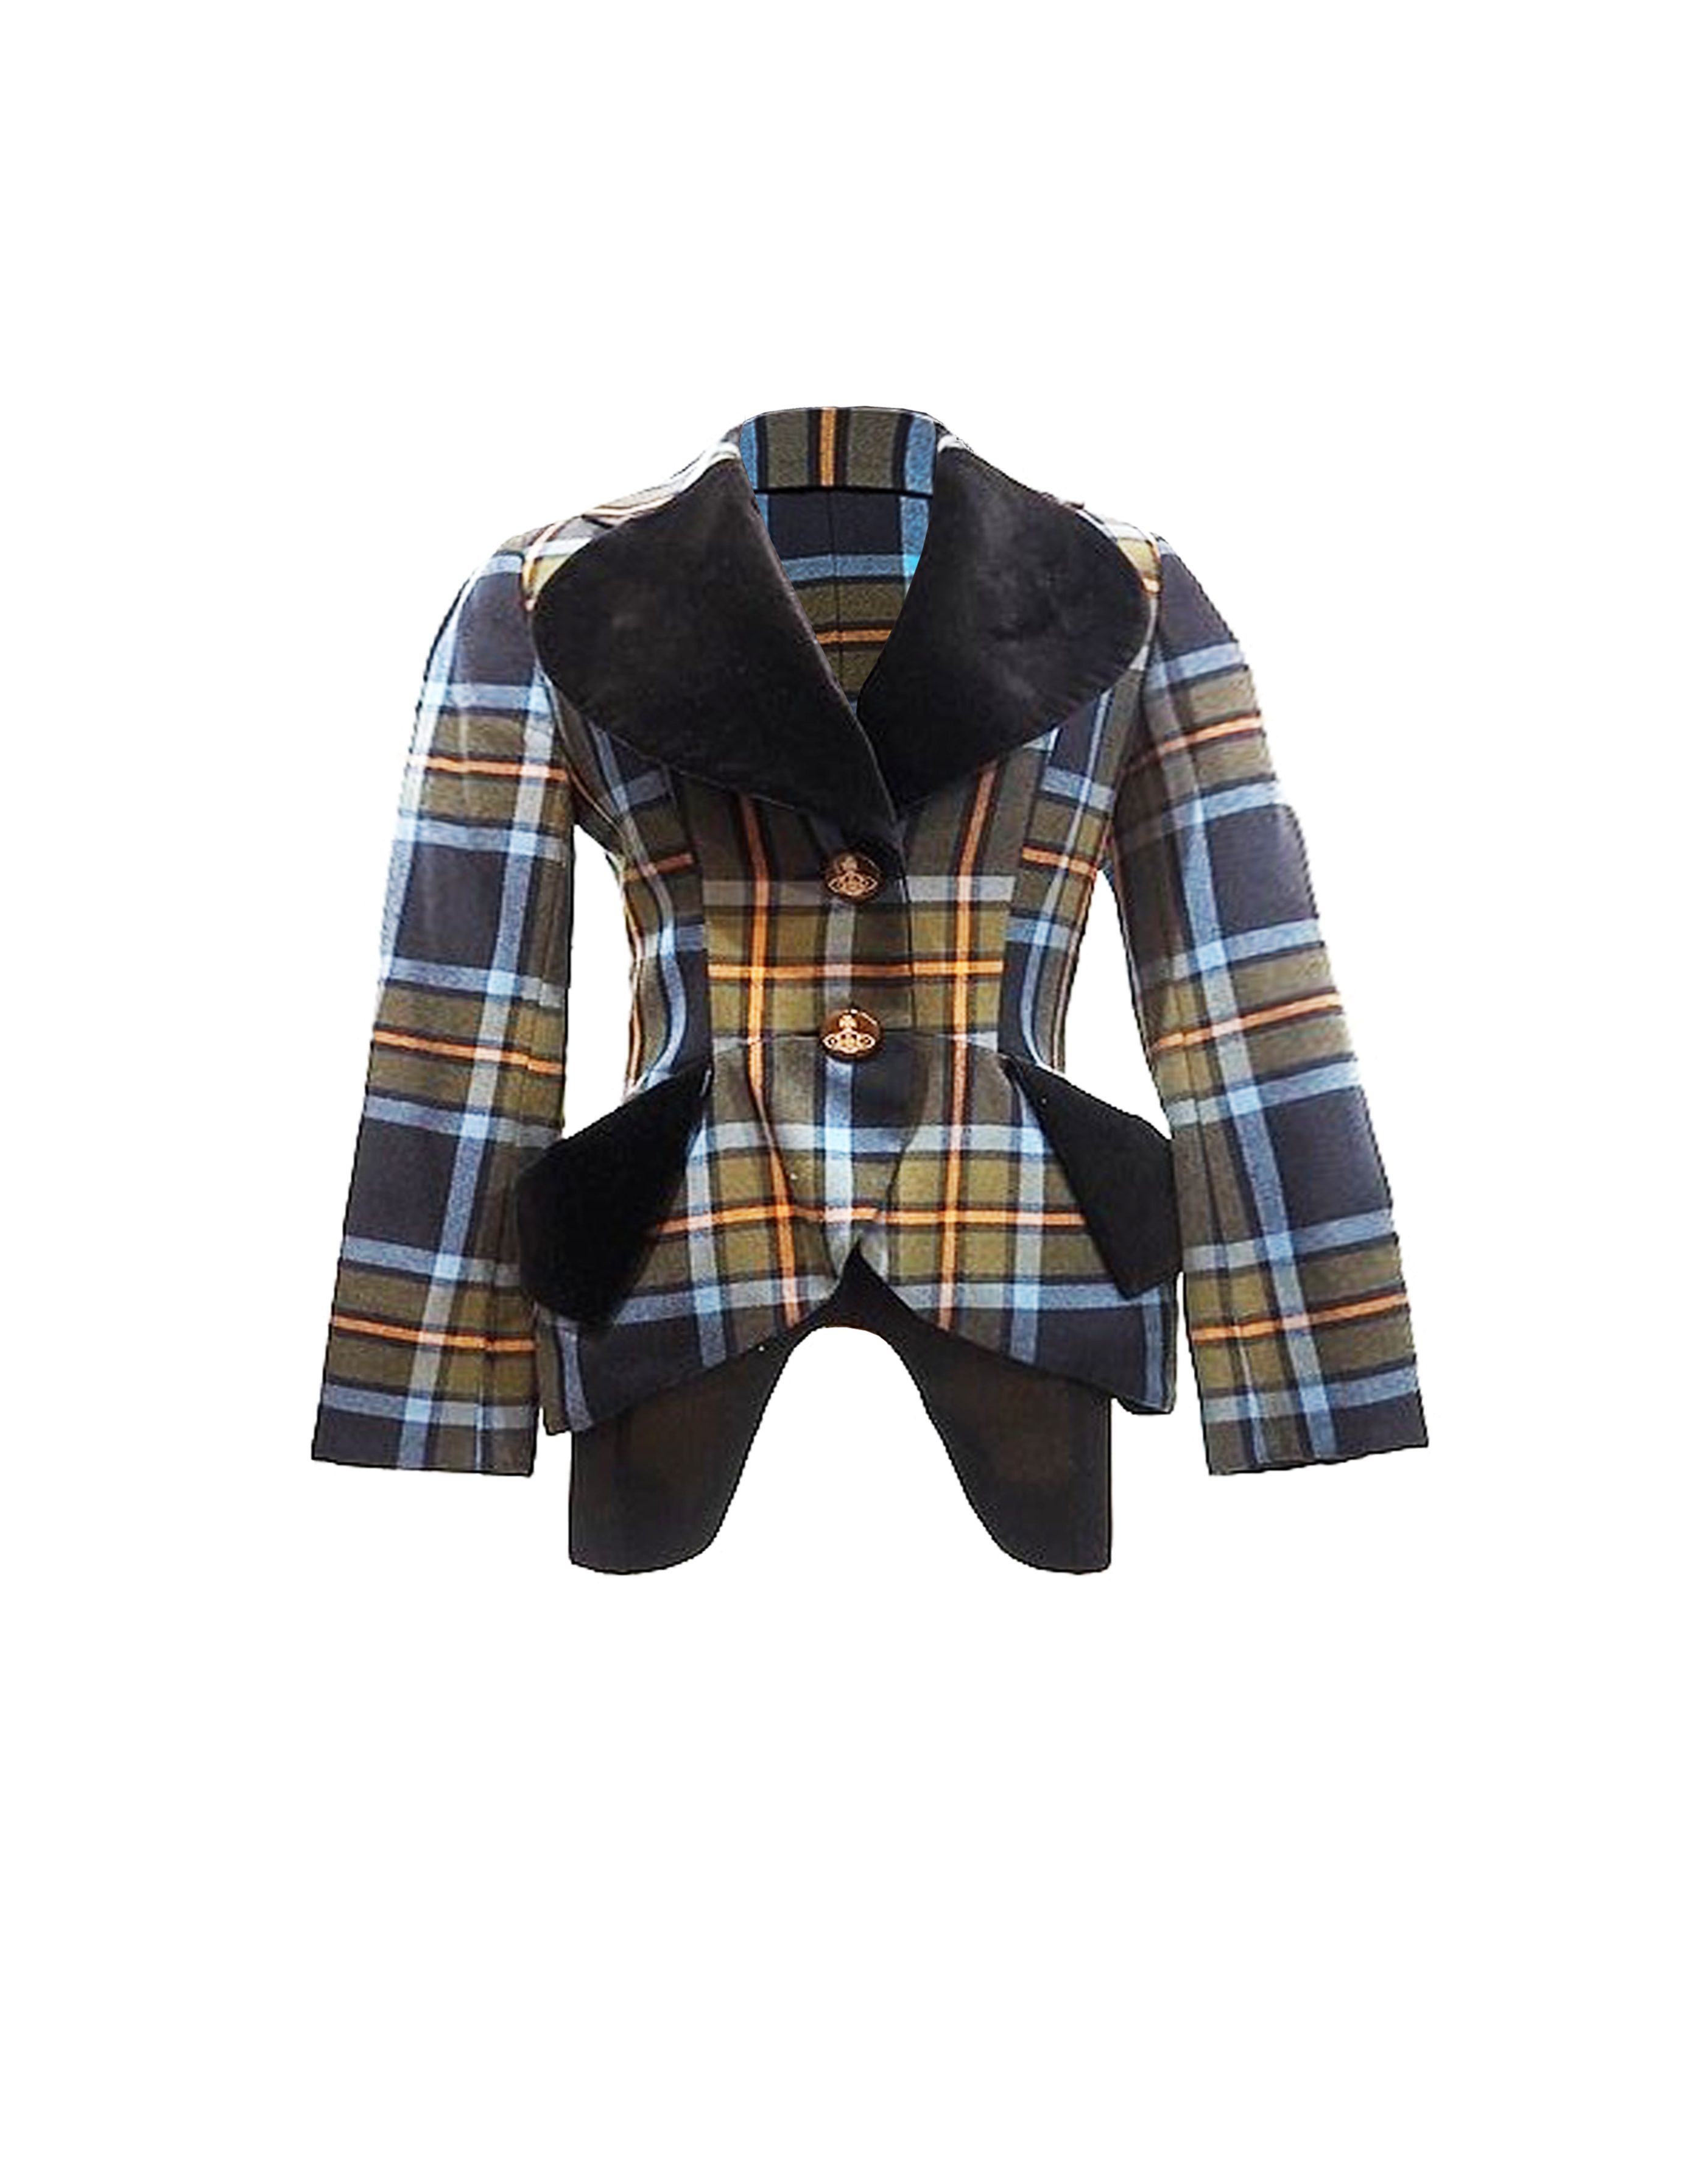 Vivienne Westwood Orb Button Wool Coat